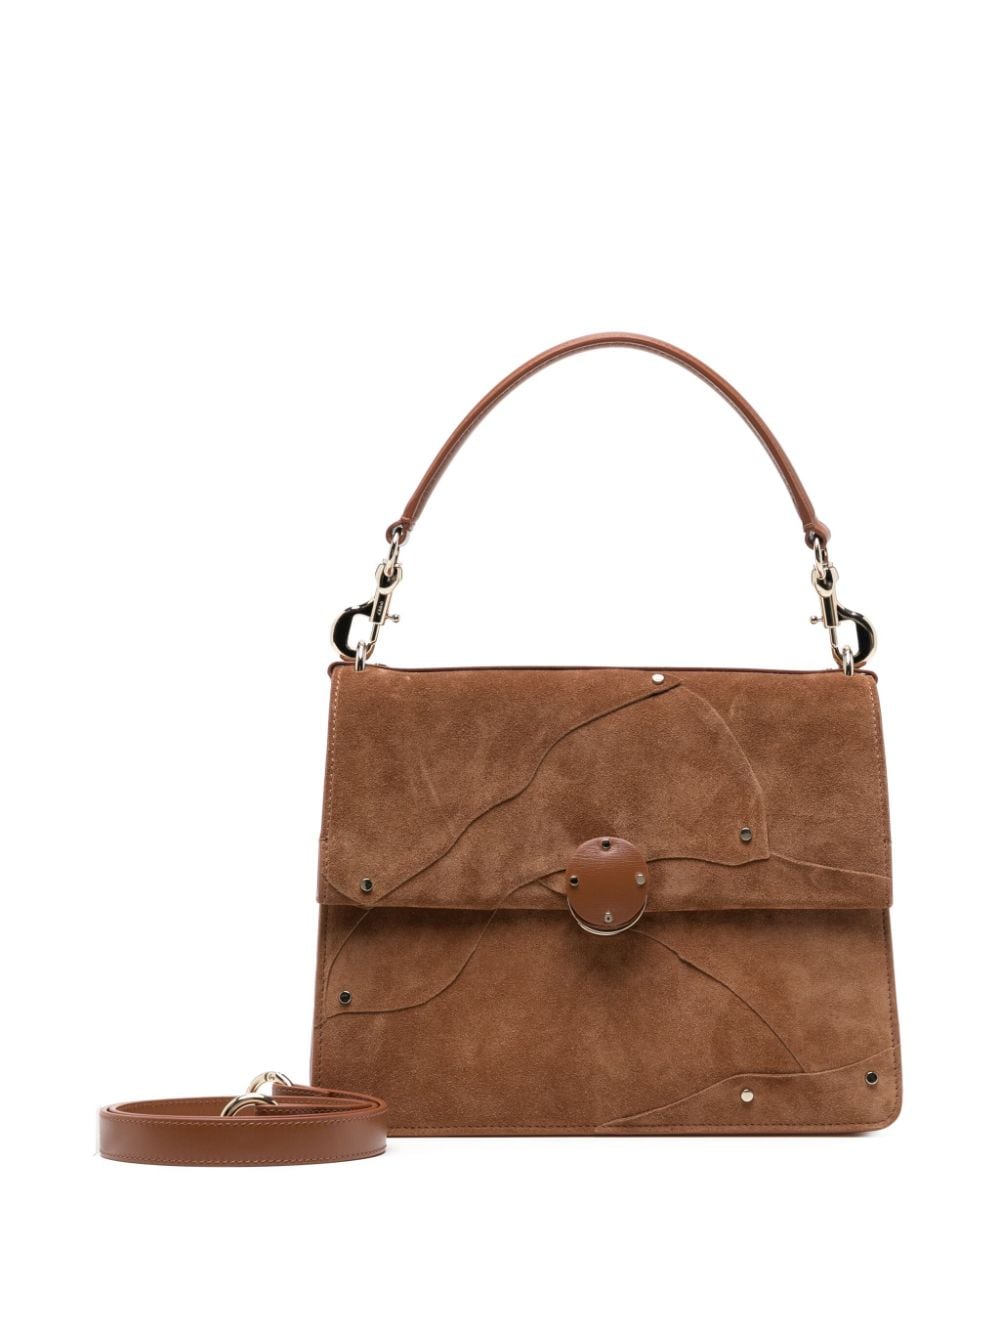 Penelope Medium Top Handle Bag in Camel Suede